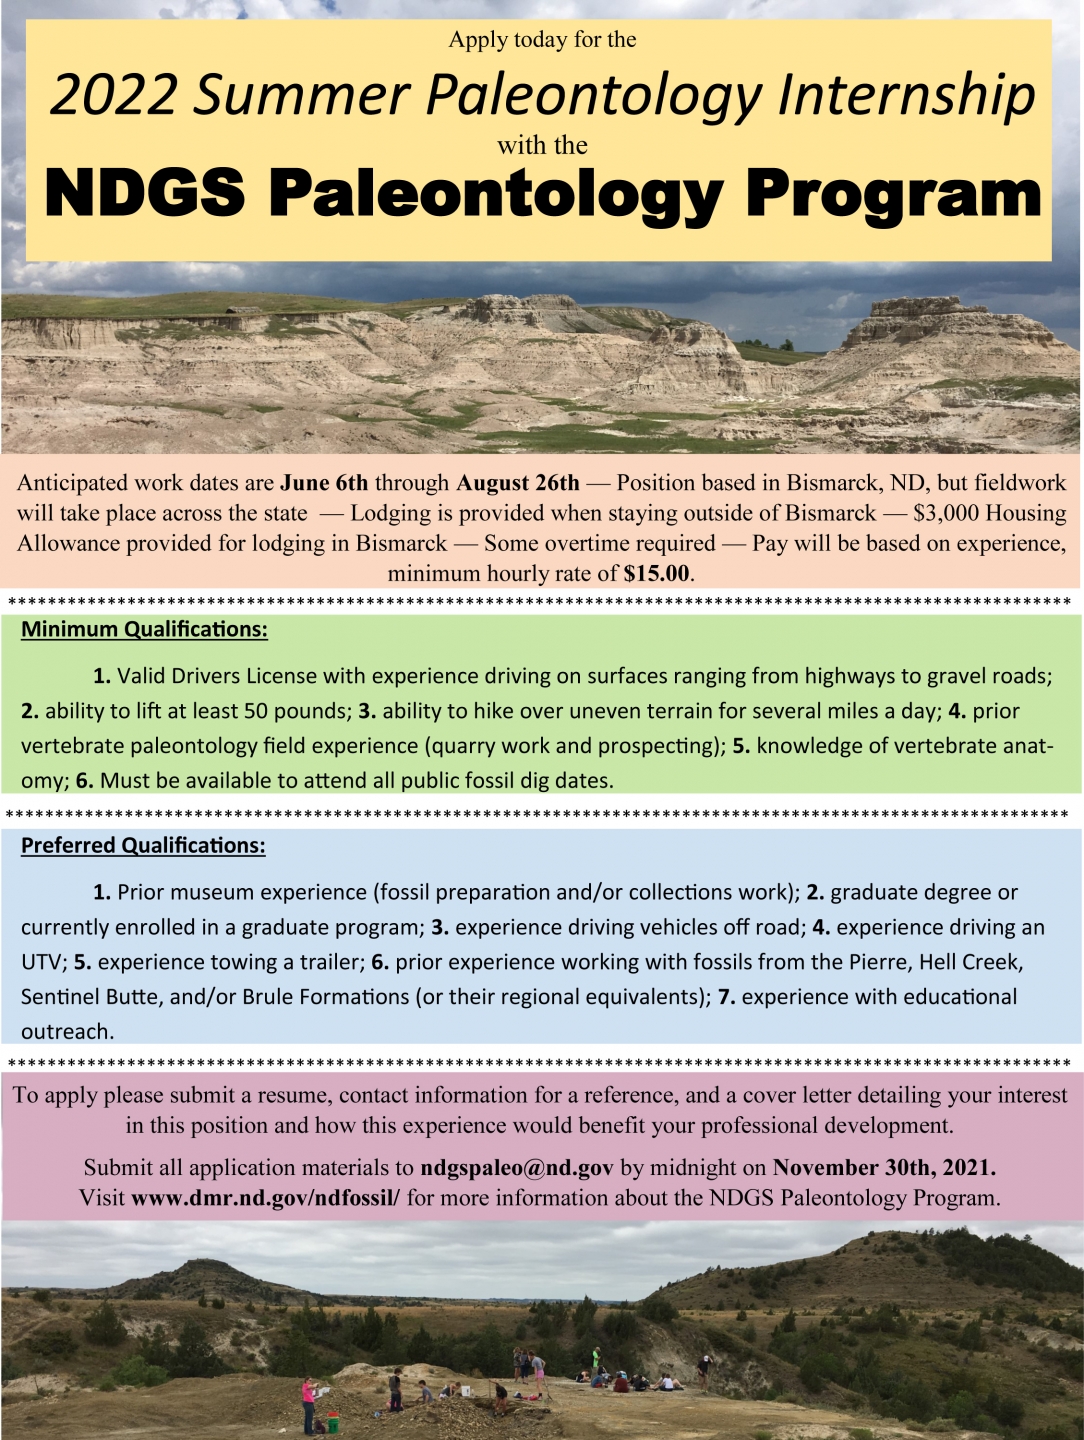 Flier advertising the 2022 paleontology intern position